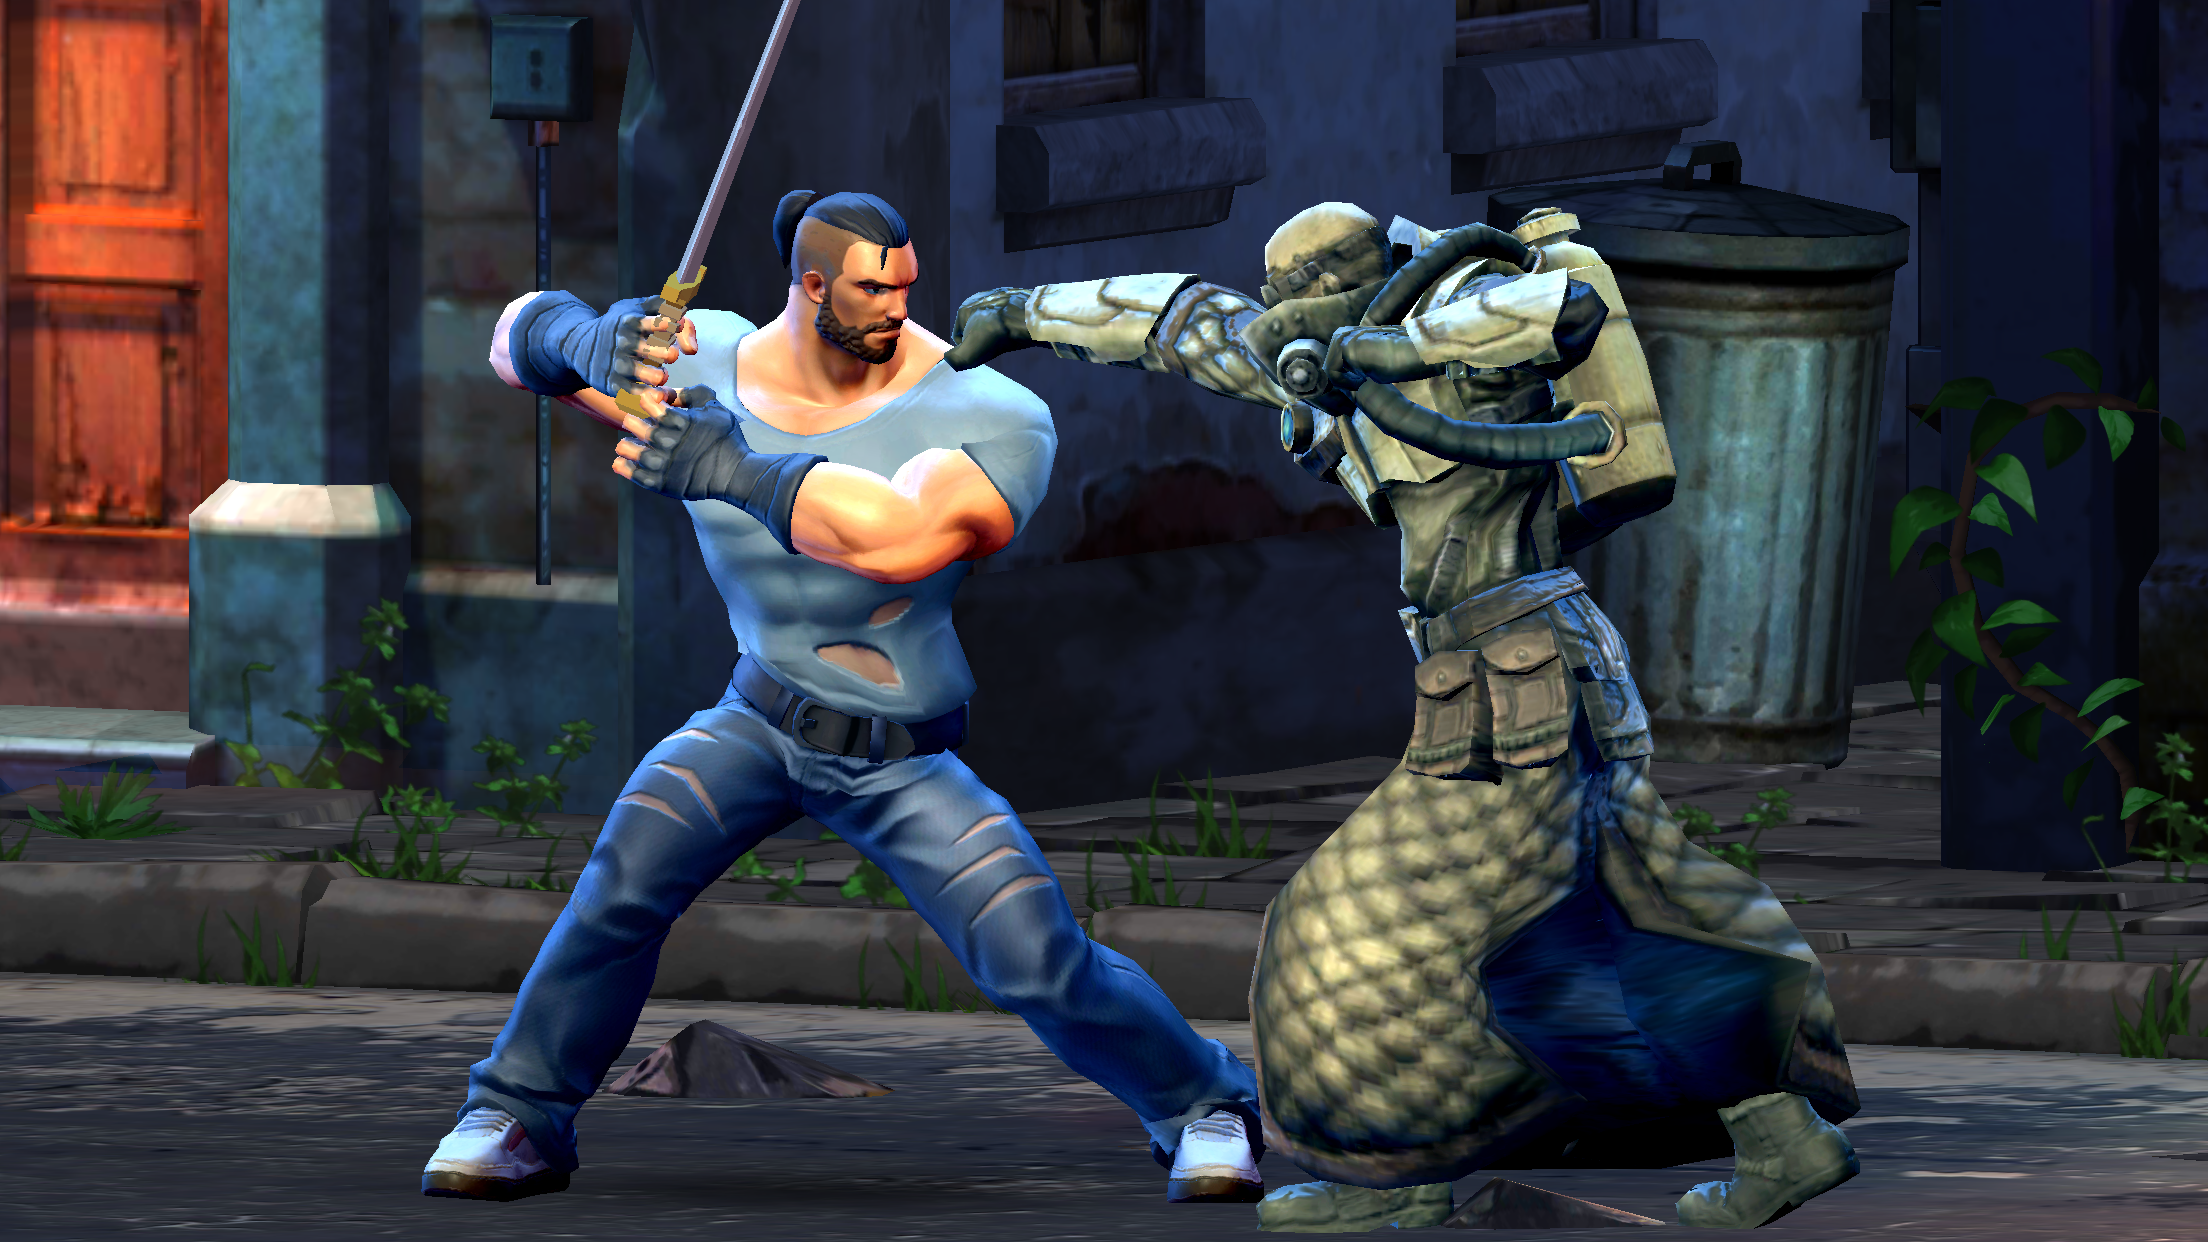 Screenshot 1 of Street Warrior Ninja petualangan Games Fighting 1.36